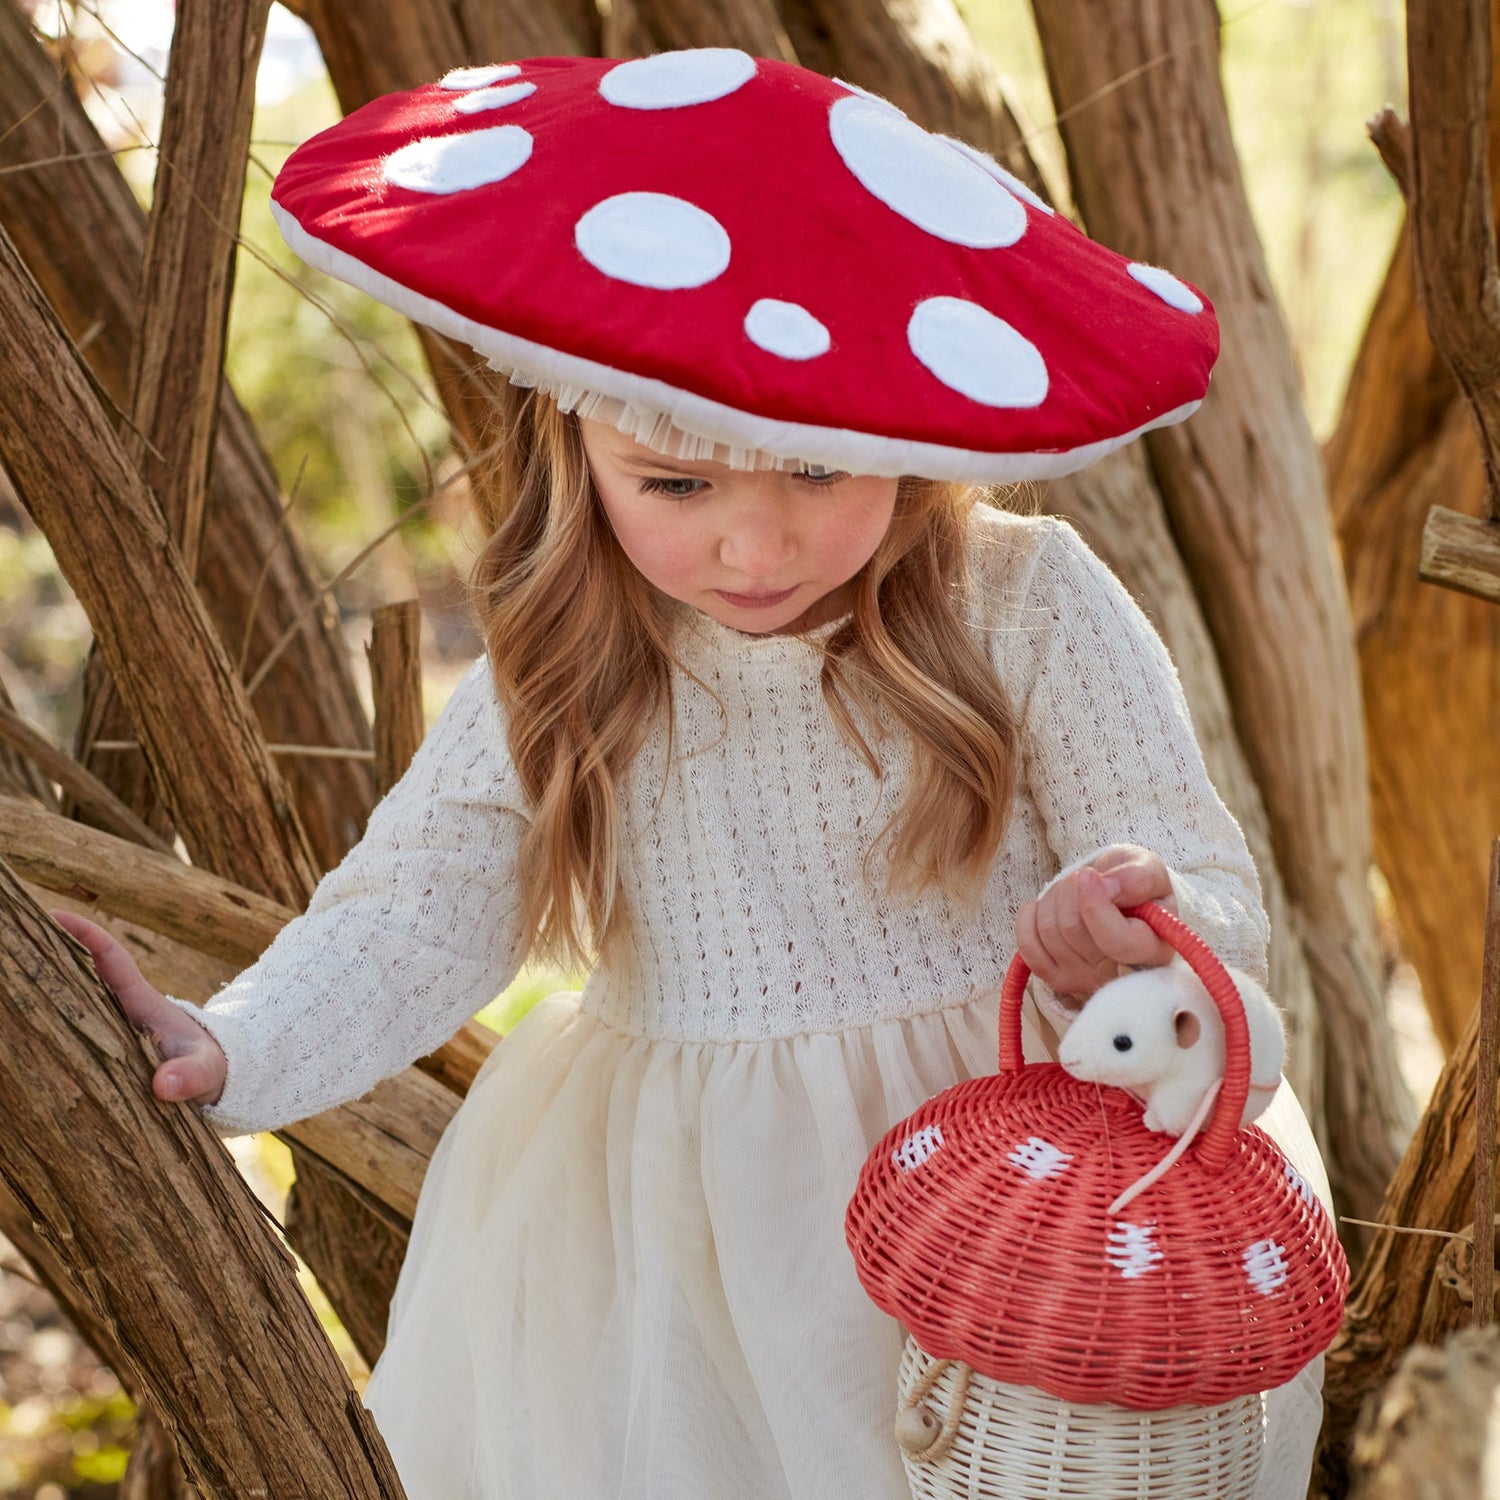 Girl wearing mushroom hat